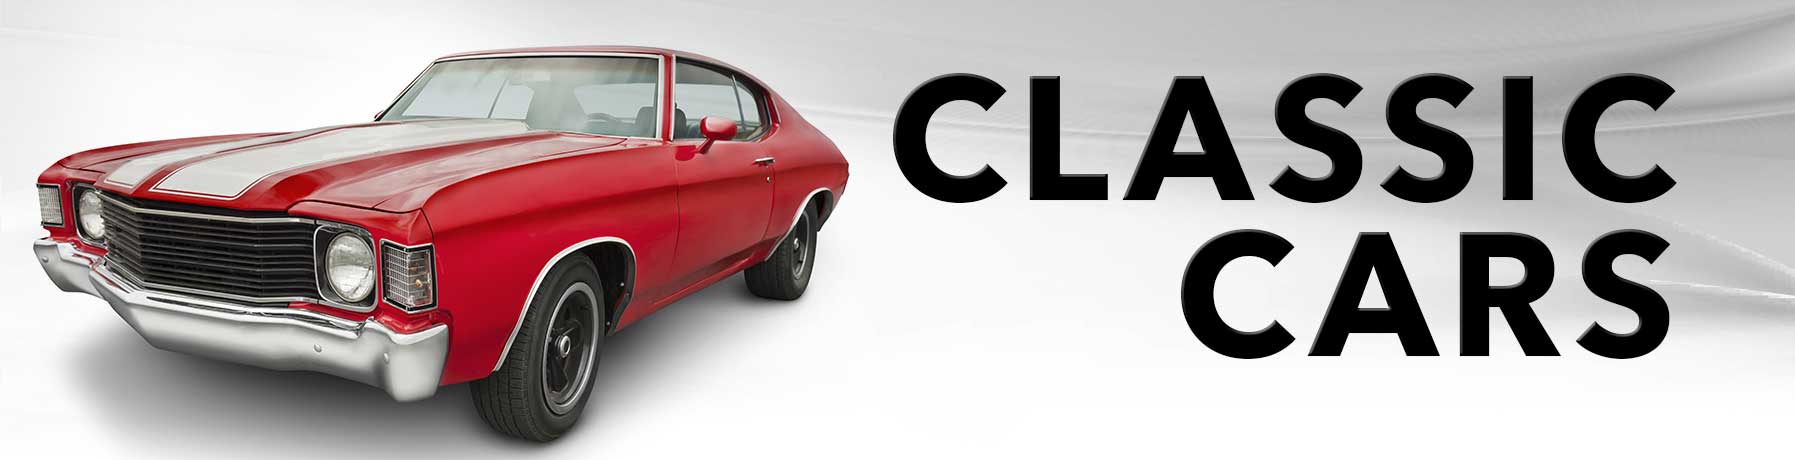 We service classic cars